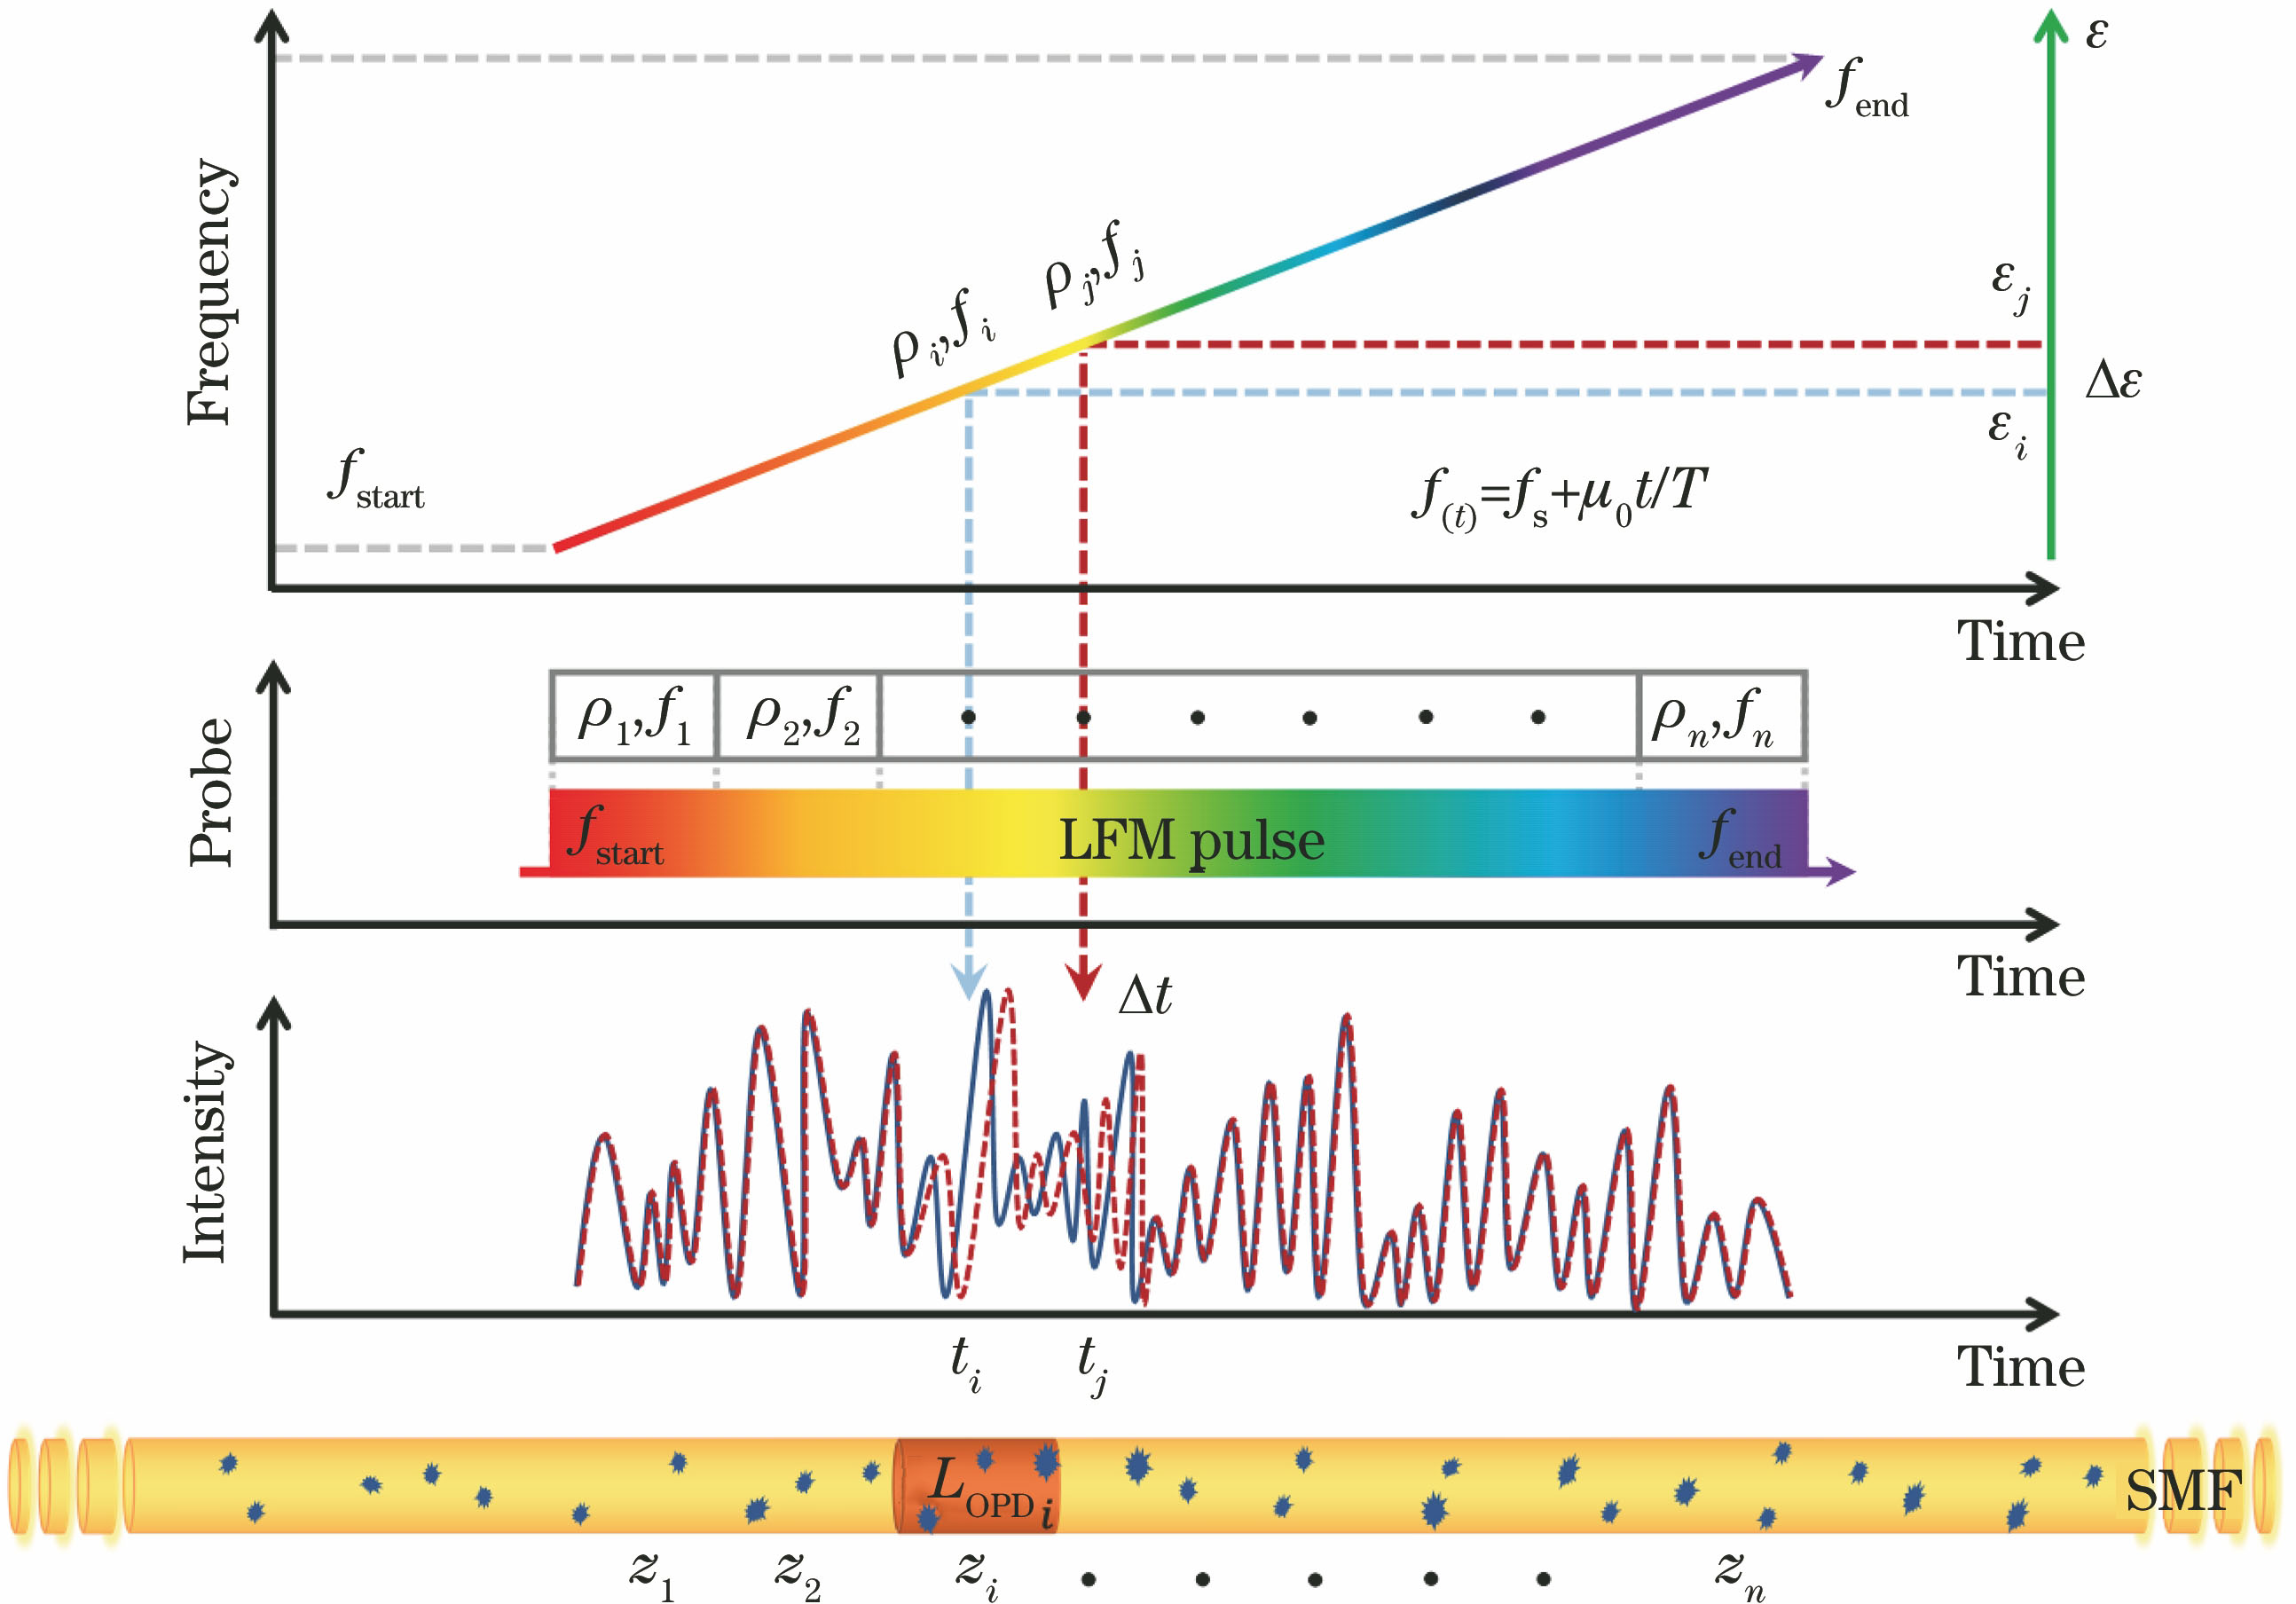 Discrete theoretical model of LFM pulse DAS